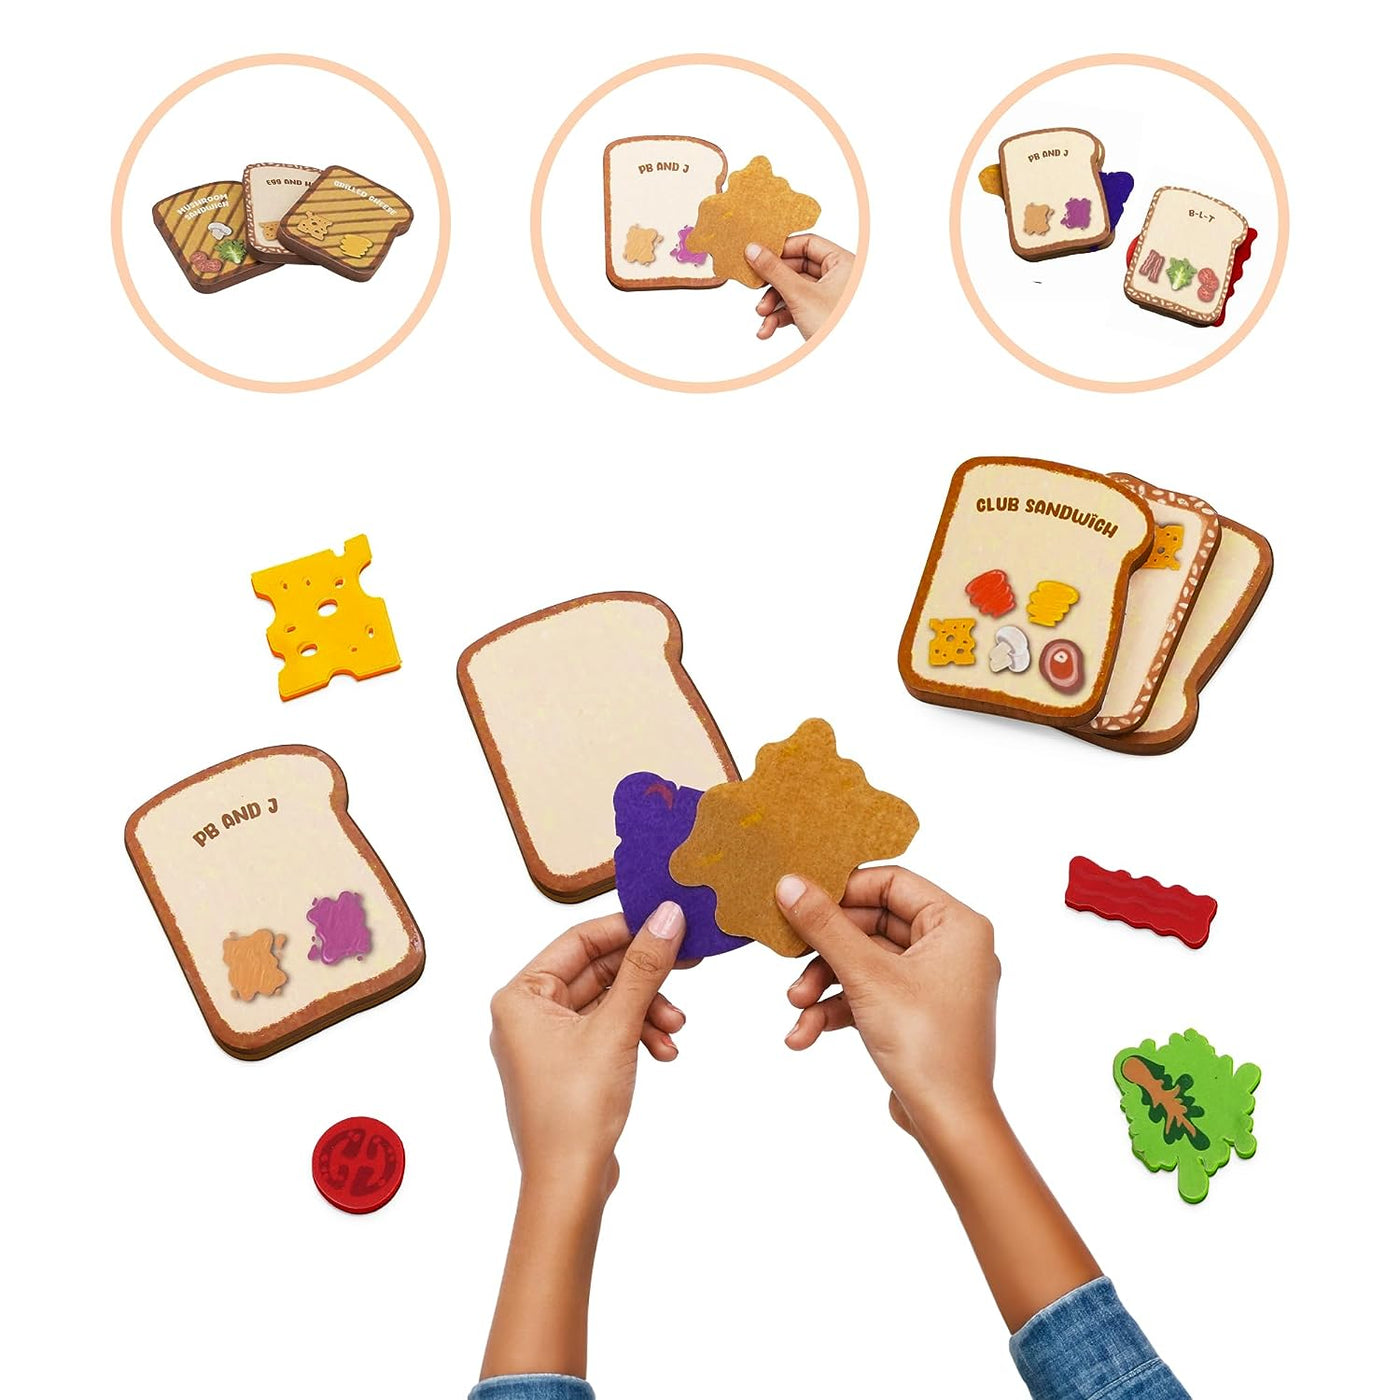 LoveDabble: Six Sneaky Sandwiches: Pretend Play Set